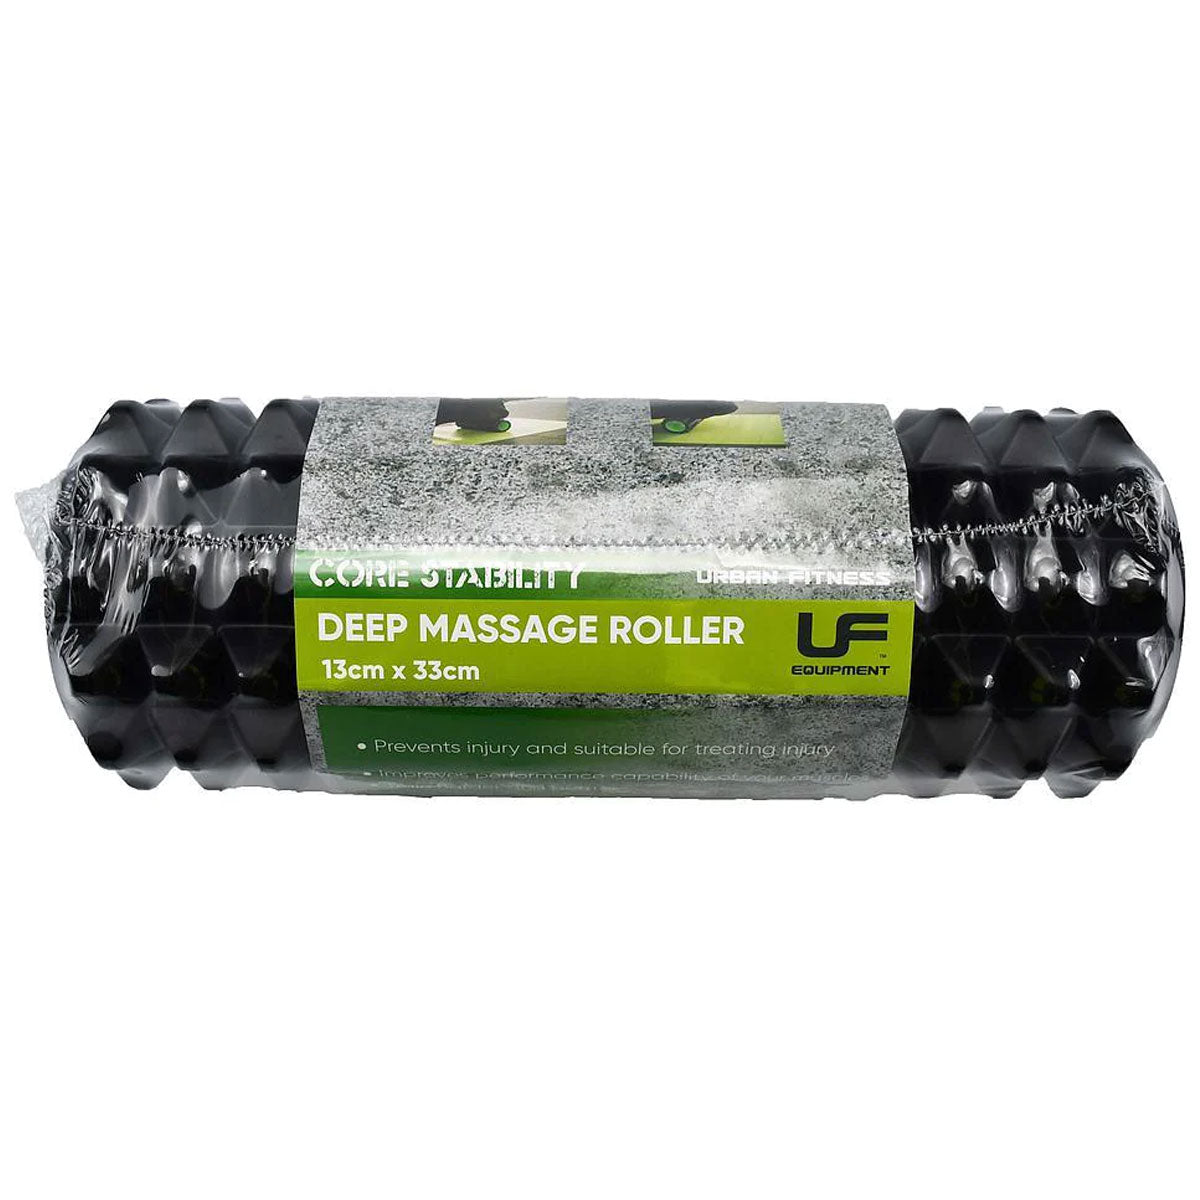 UFE Deep Massage Roller 13cm x 33cm - Black